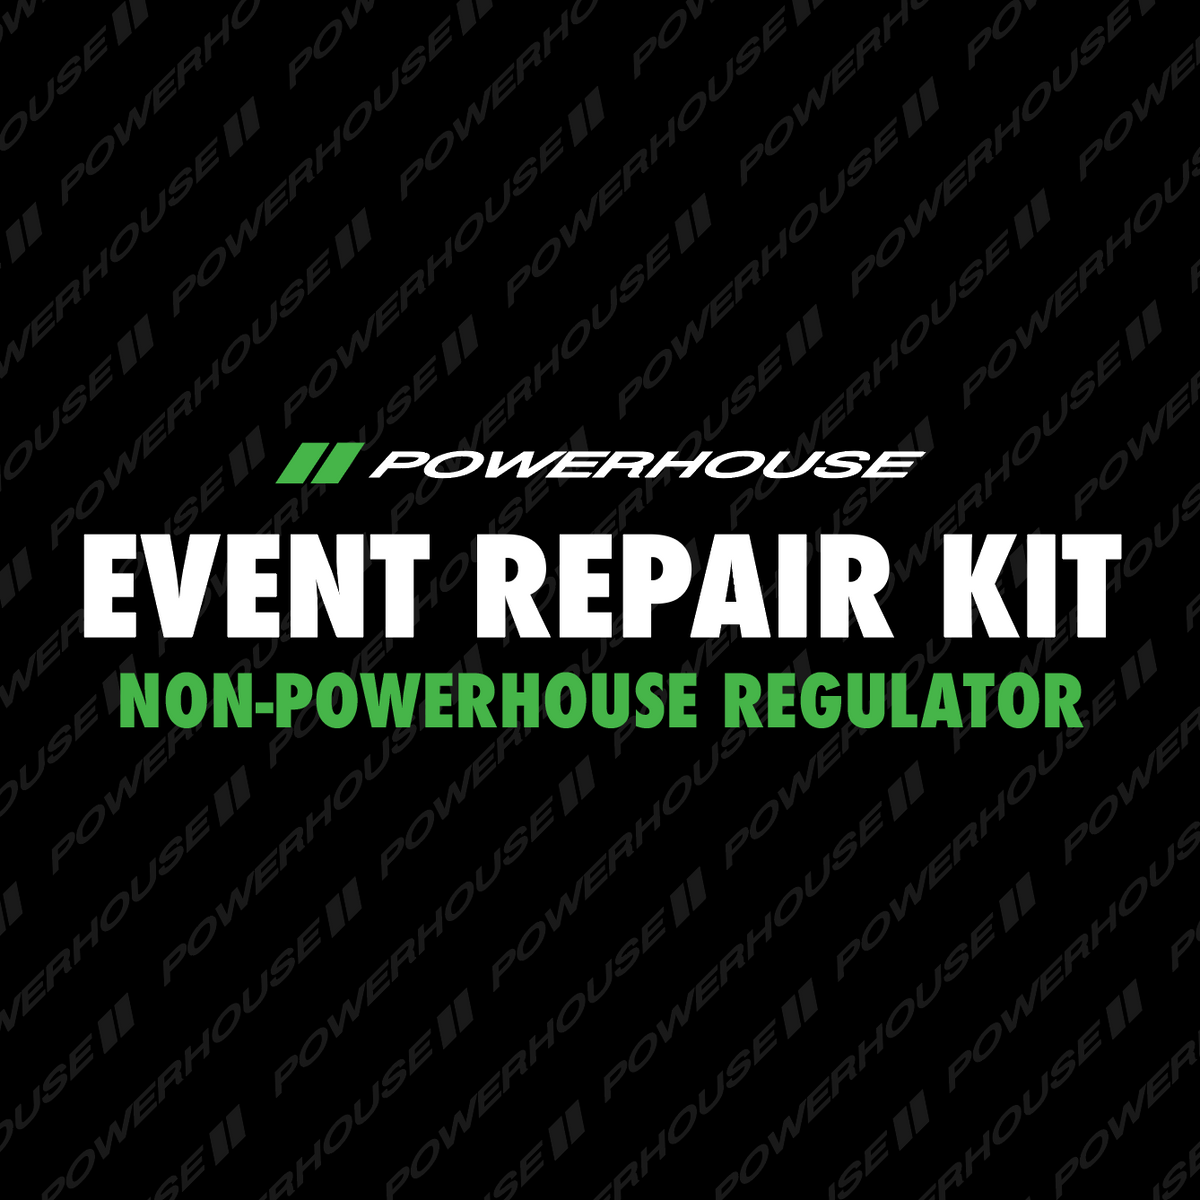 Event Repair Kit (Non-Powerhouse Regulator)